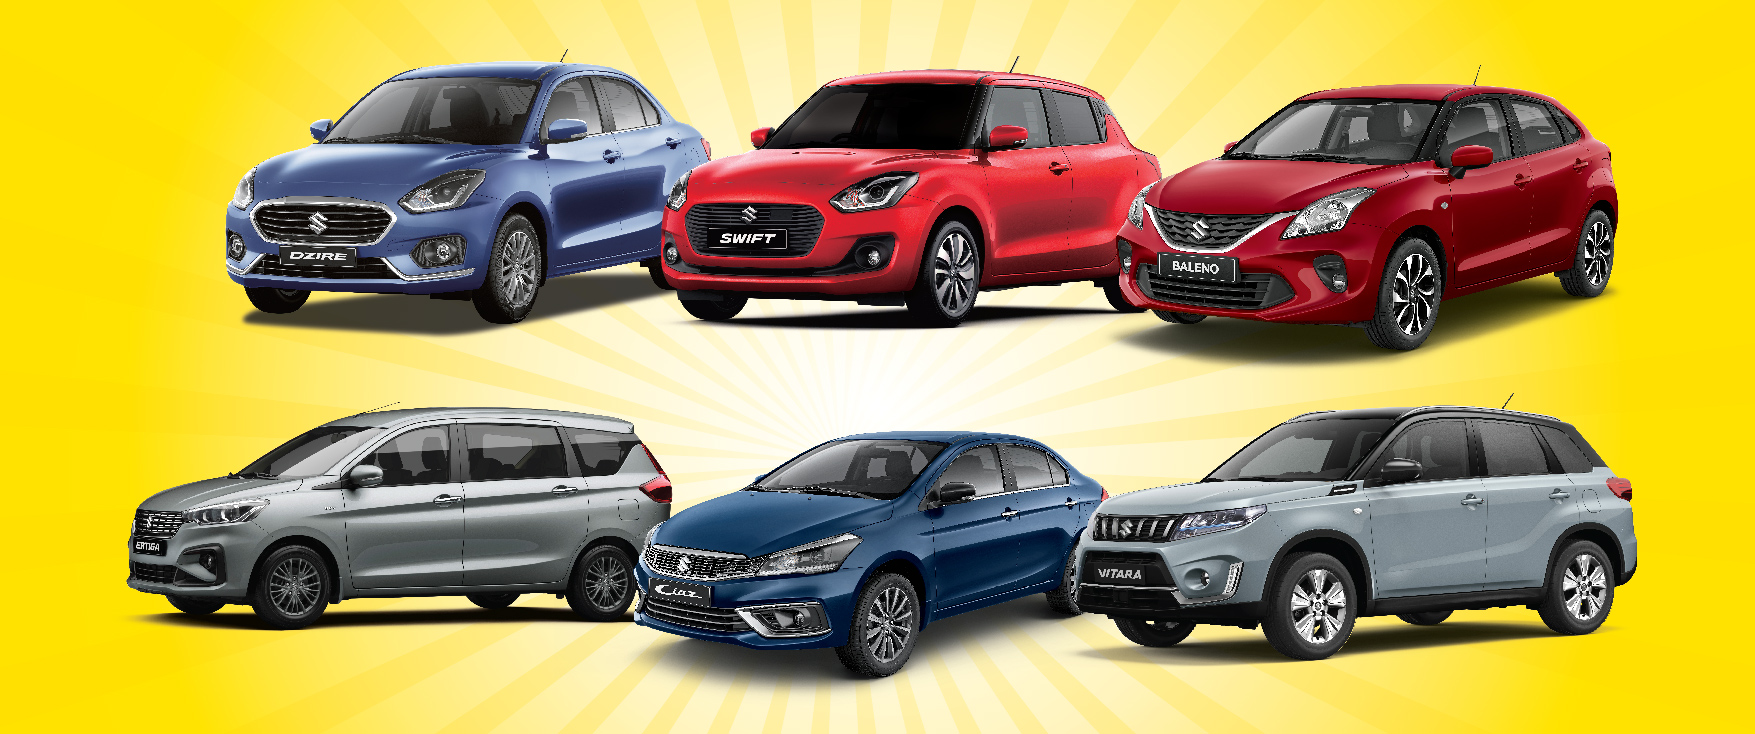 Unbeatable benefits on Suzuki’s new models